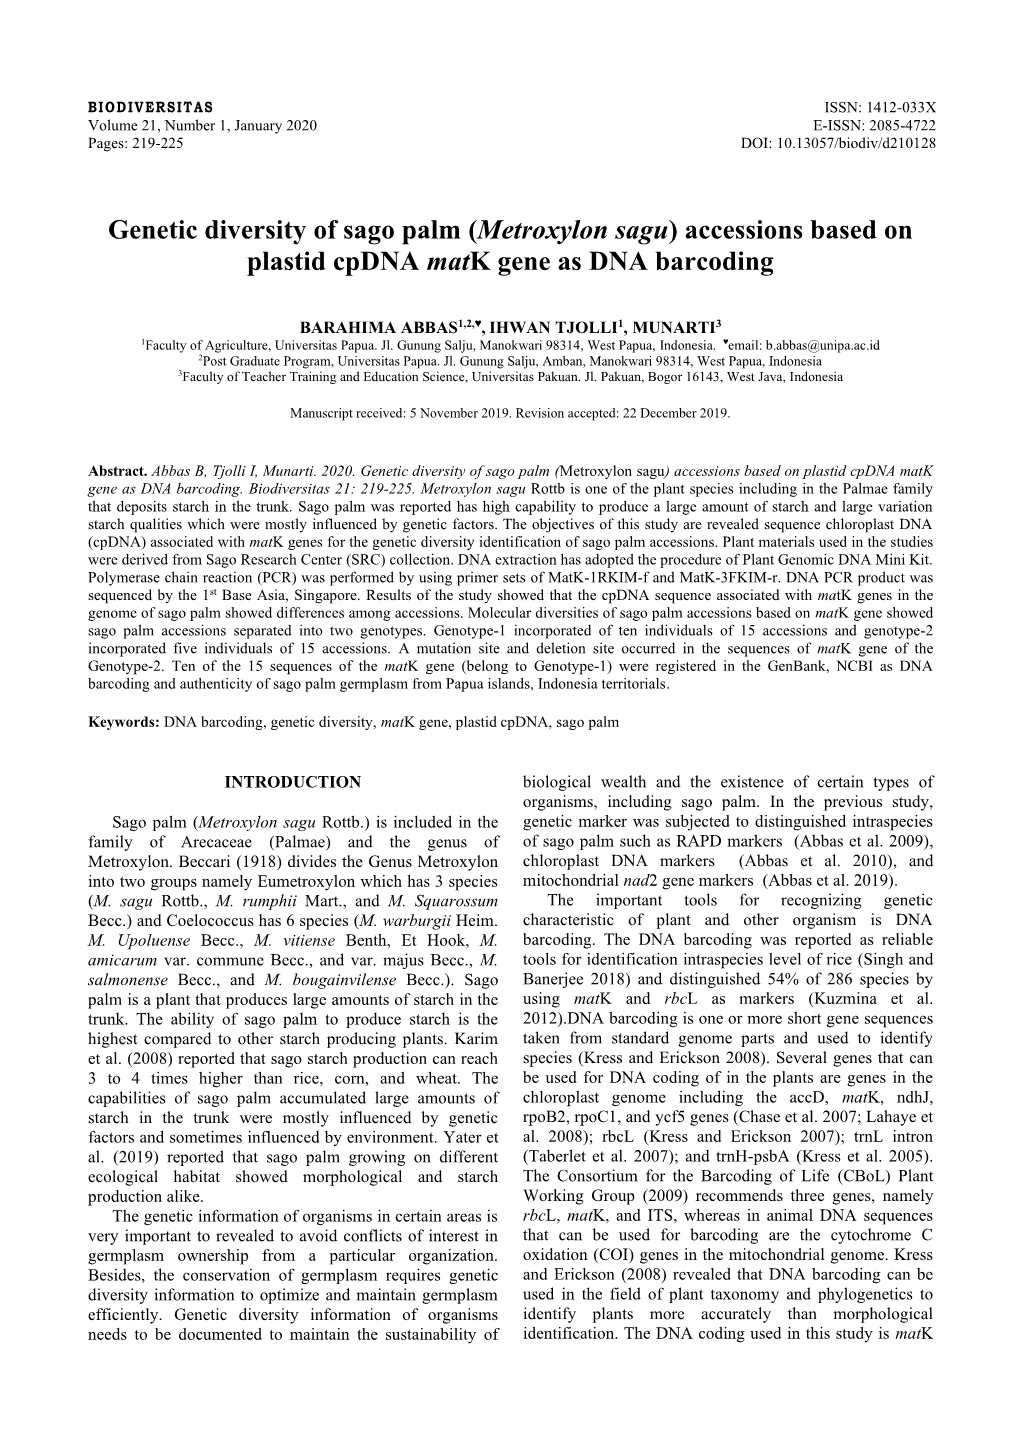 Genetic Diversity of Sago Palm (Metroxylon Sagu) Accessions Based on Plastid Cpdna Matk Gene As DNA Barcoding